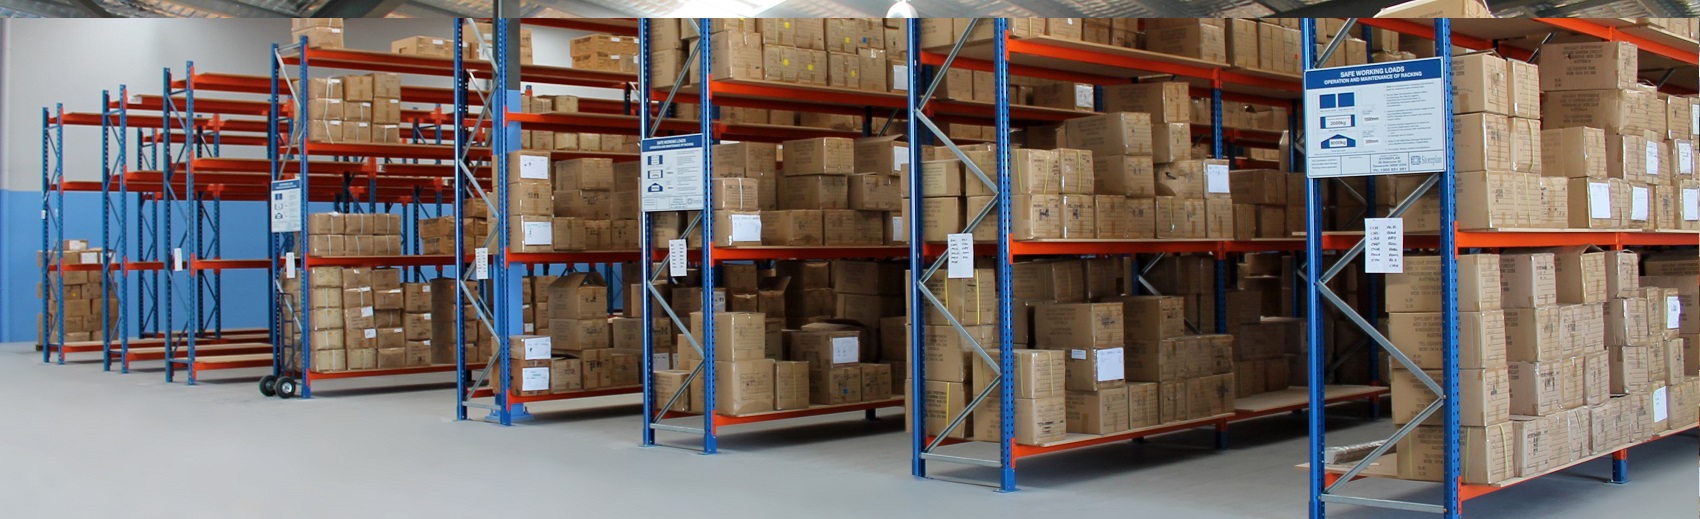 Qatar-Warehouse-Shelving-Systems